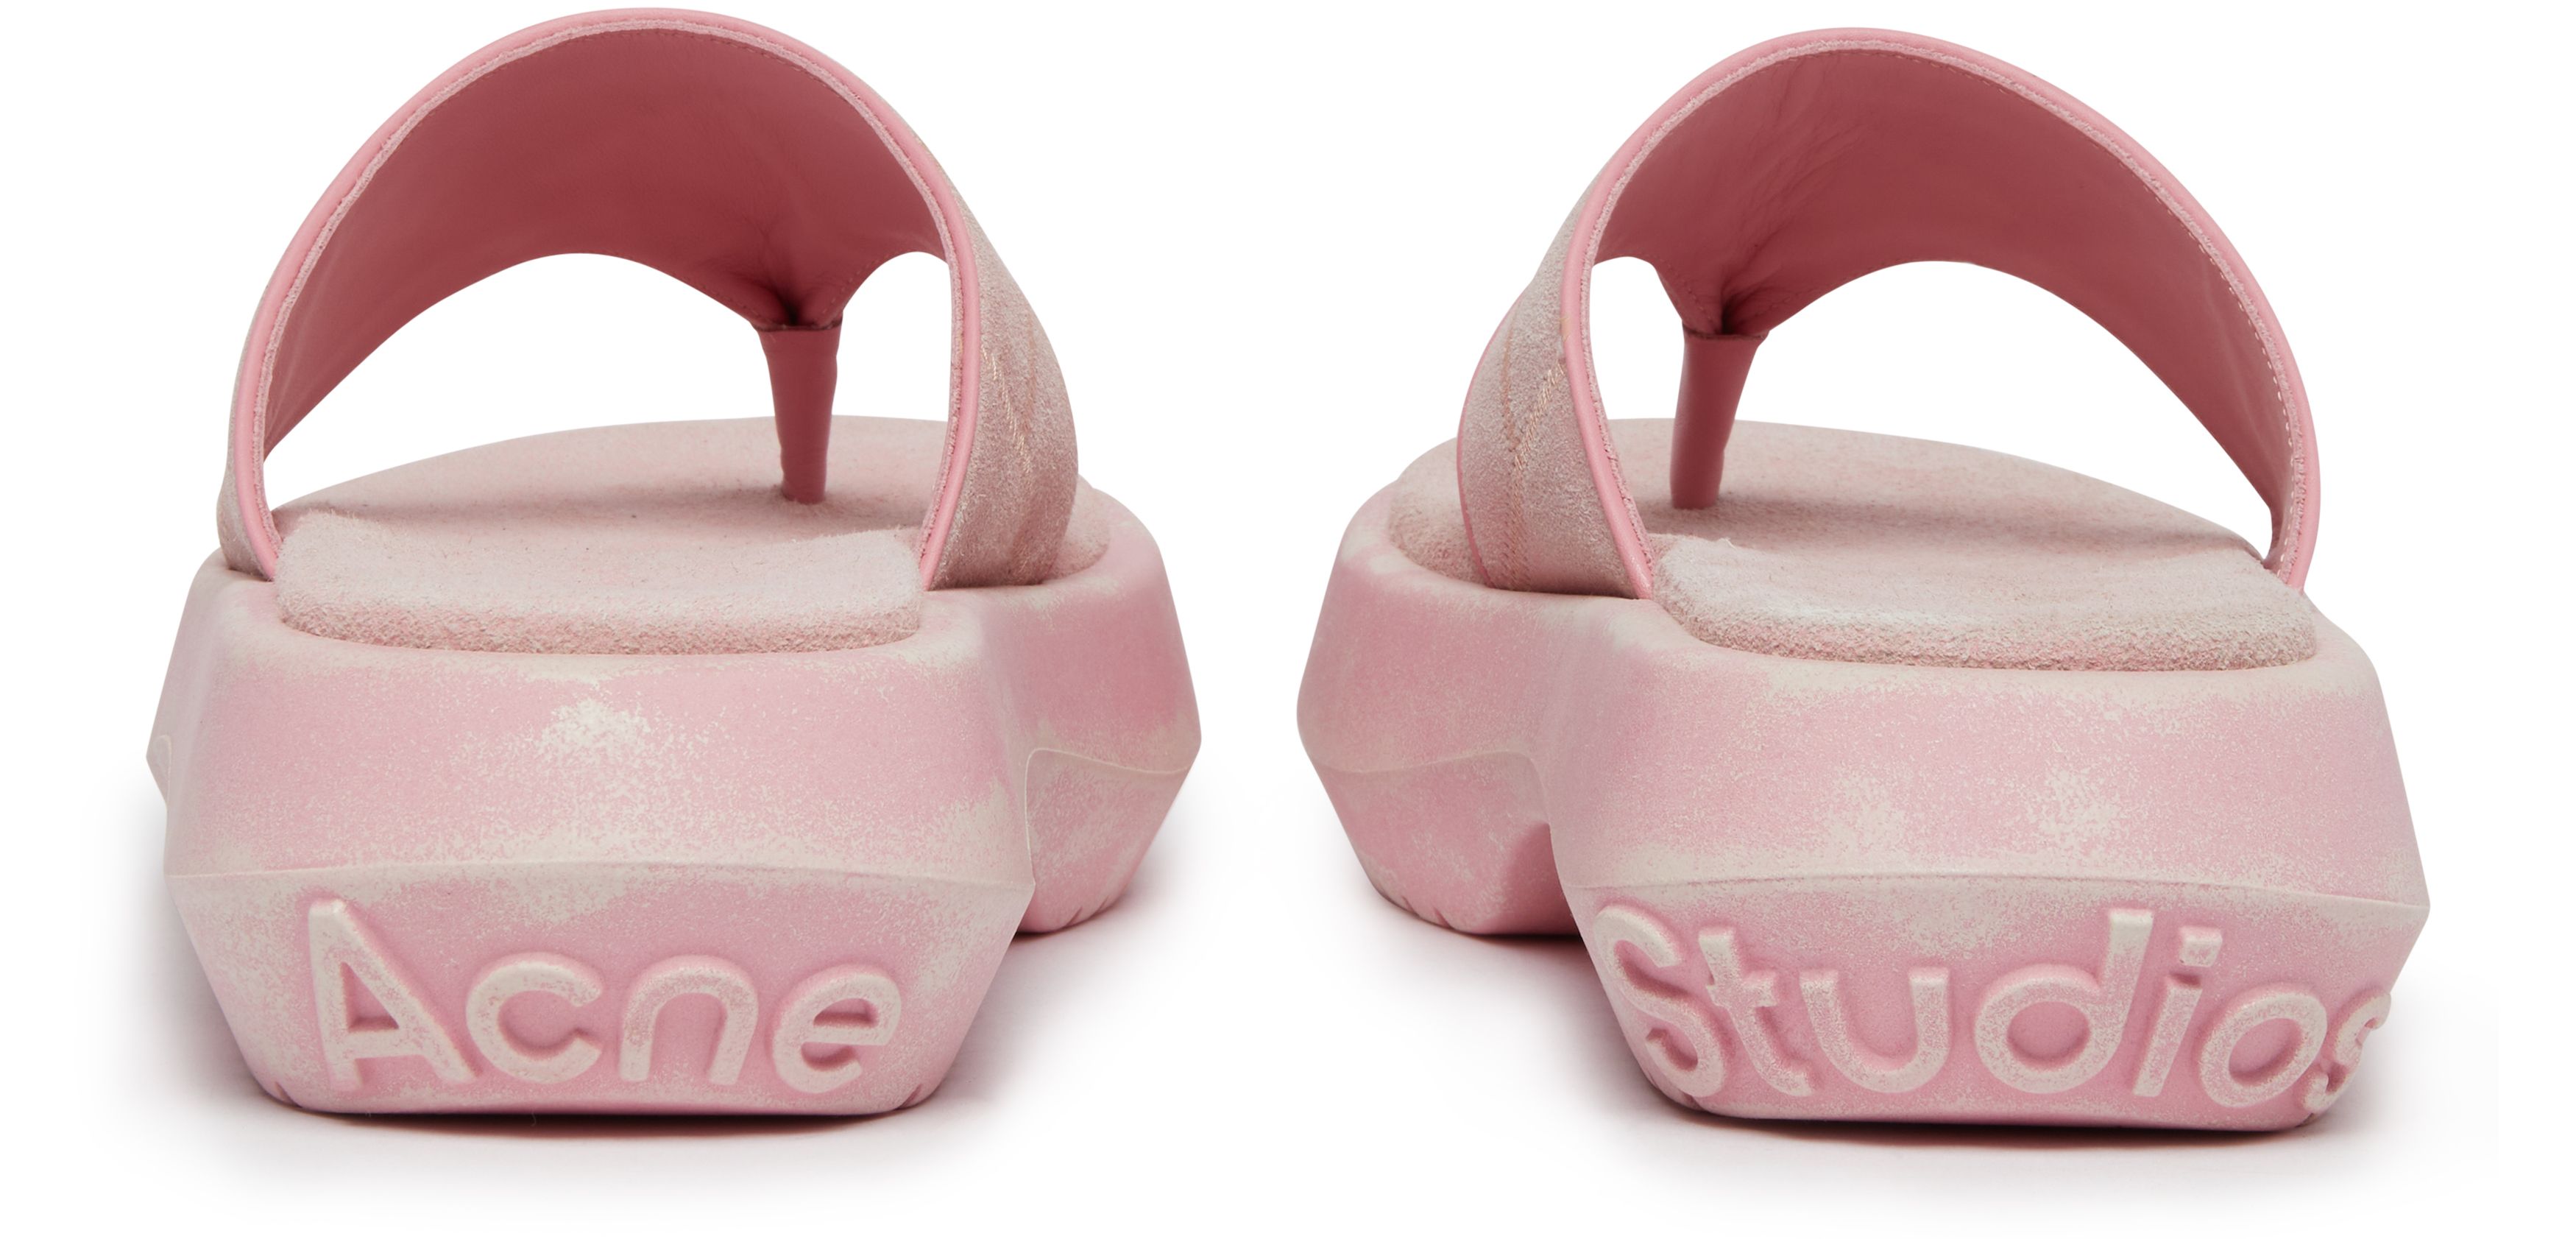 Acne Studios Berry Flip Age sandals